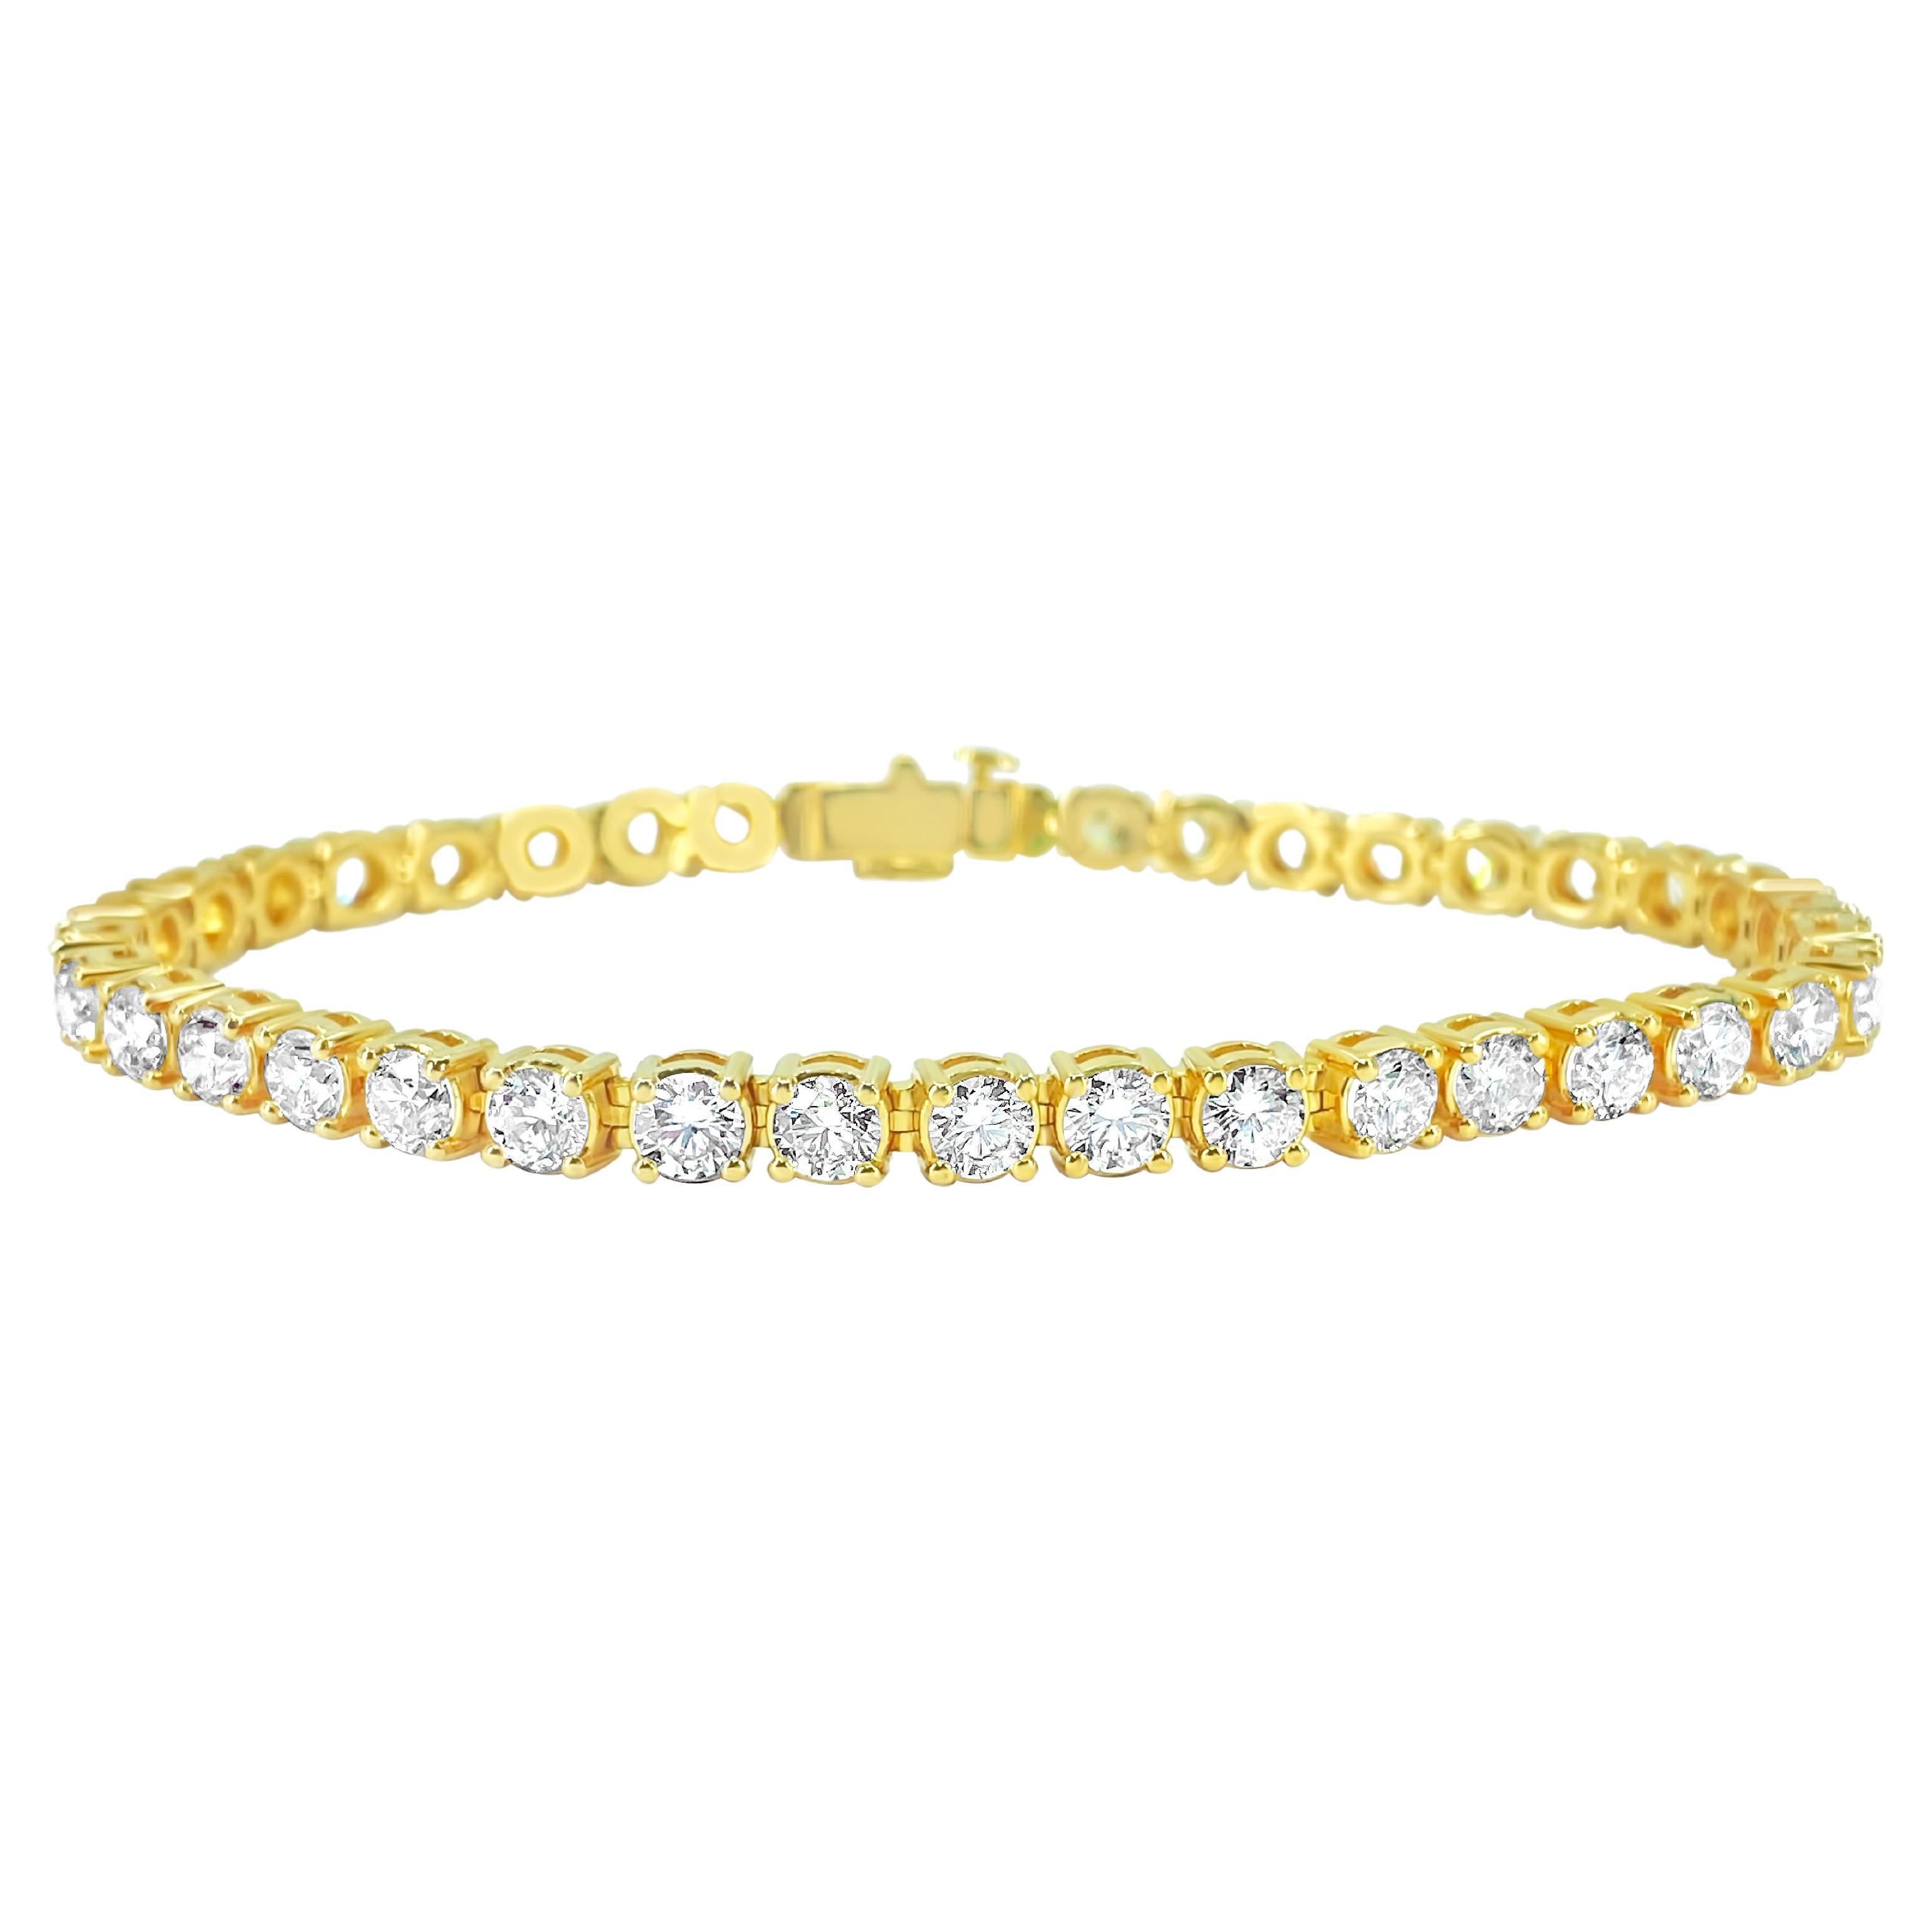 12.33 Carat Diamond Tennis Bracelet in 14k Gold For Sale